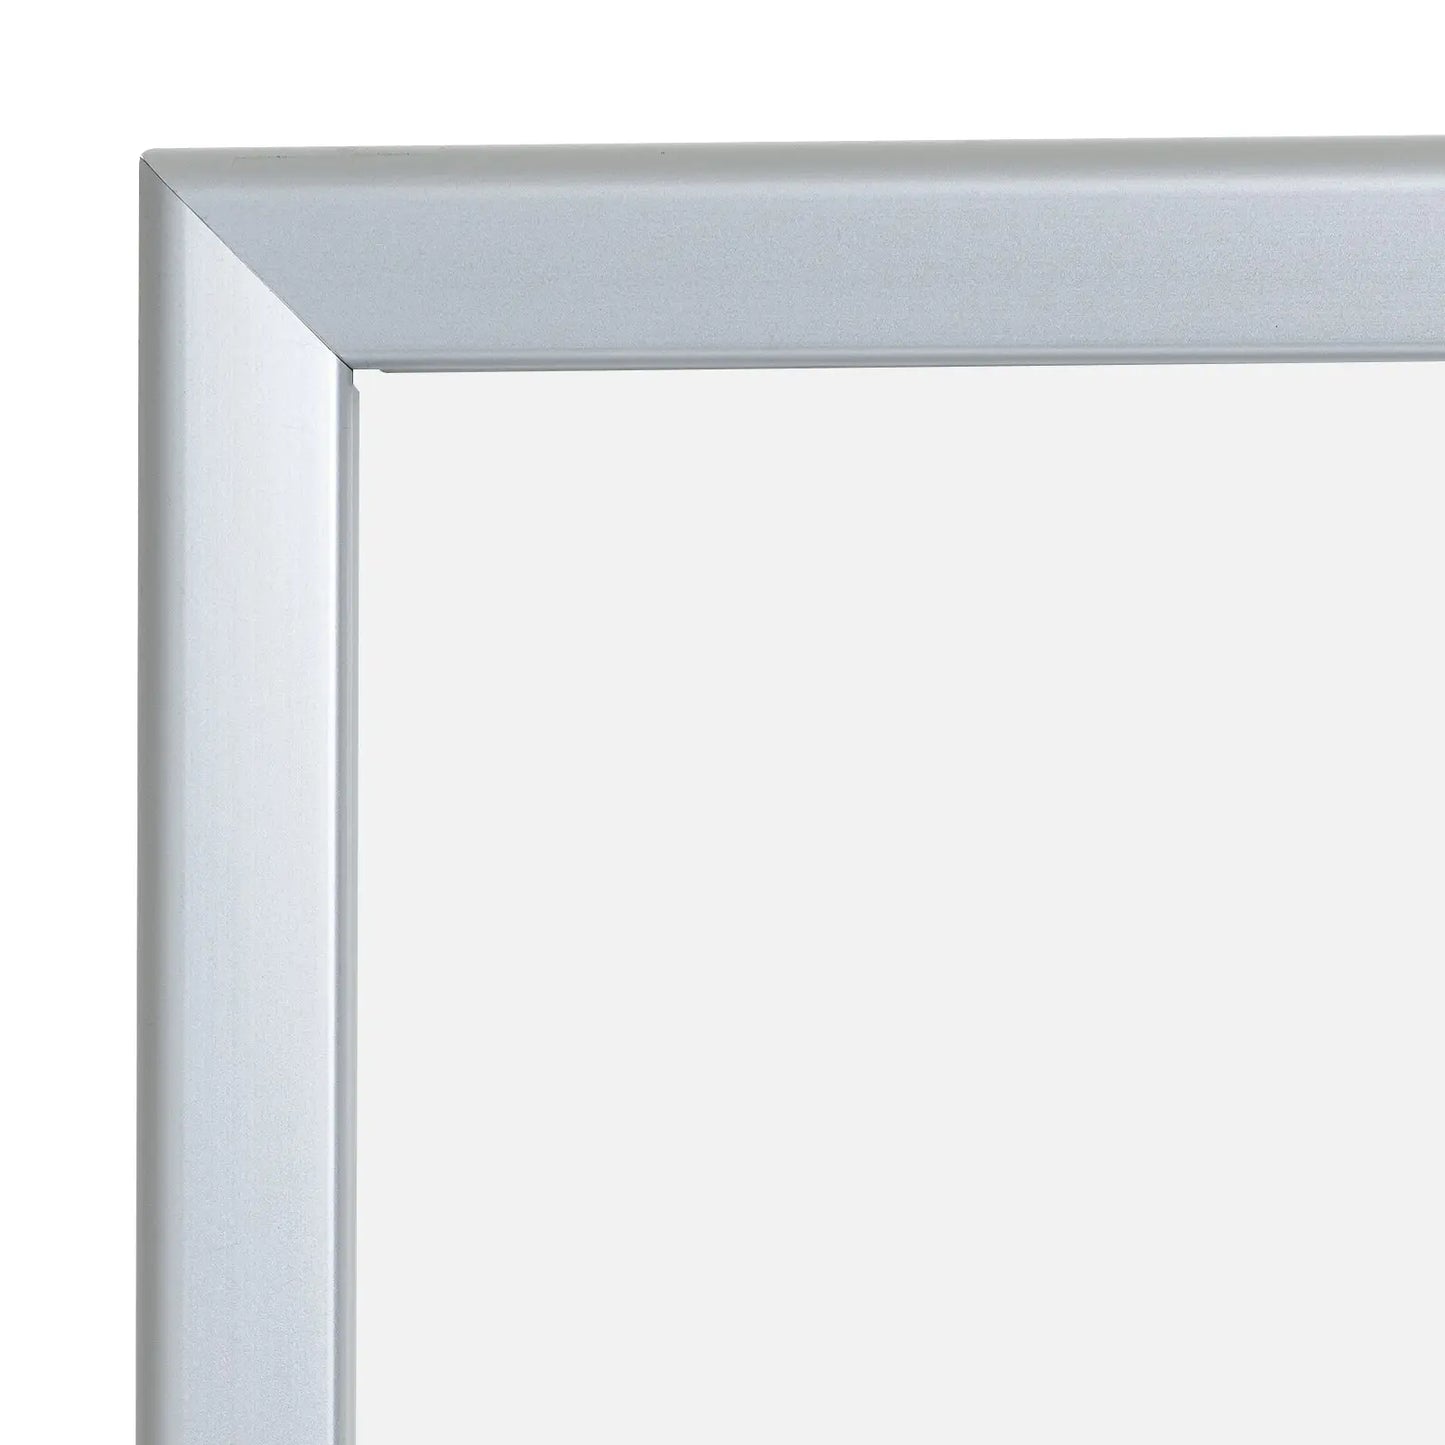 18x24 Snap Poster Frame - 1.25 inch Silver Profile Safe Corner